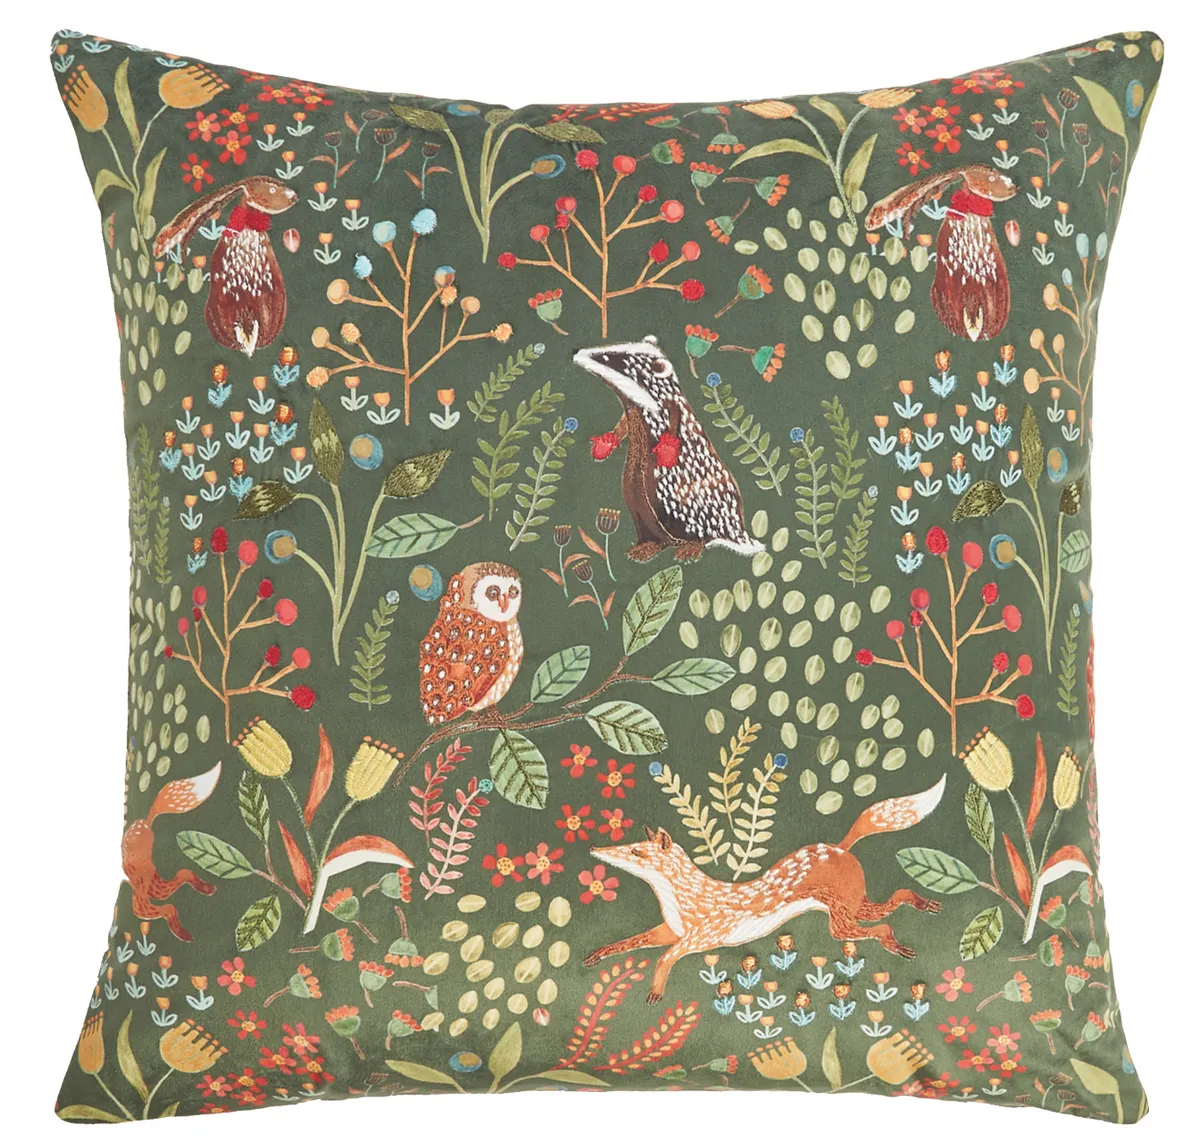 Woodland animal print cushion, £22.50, Marks & Spencer